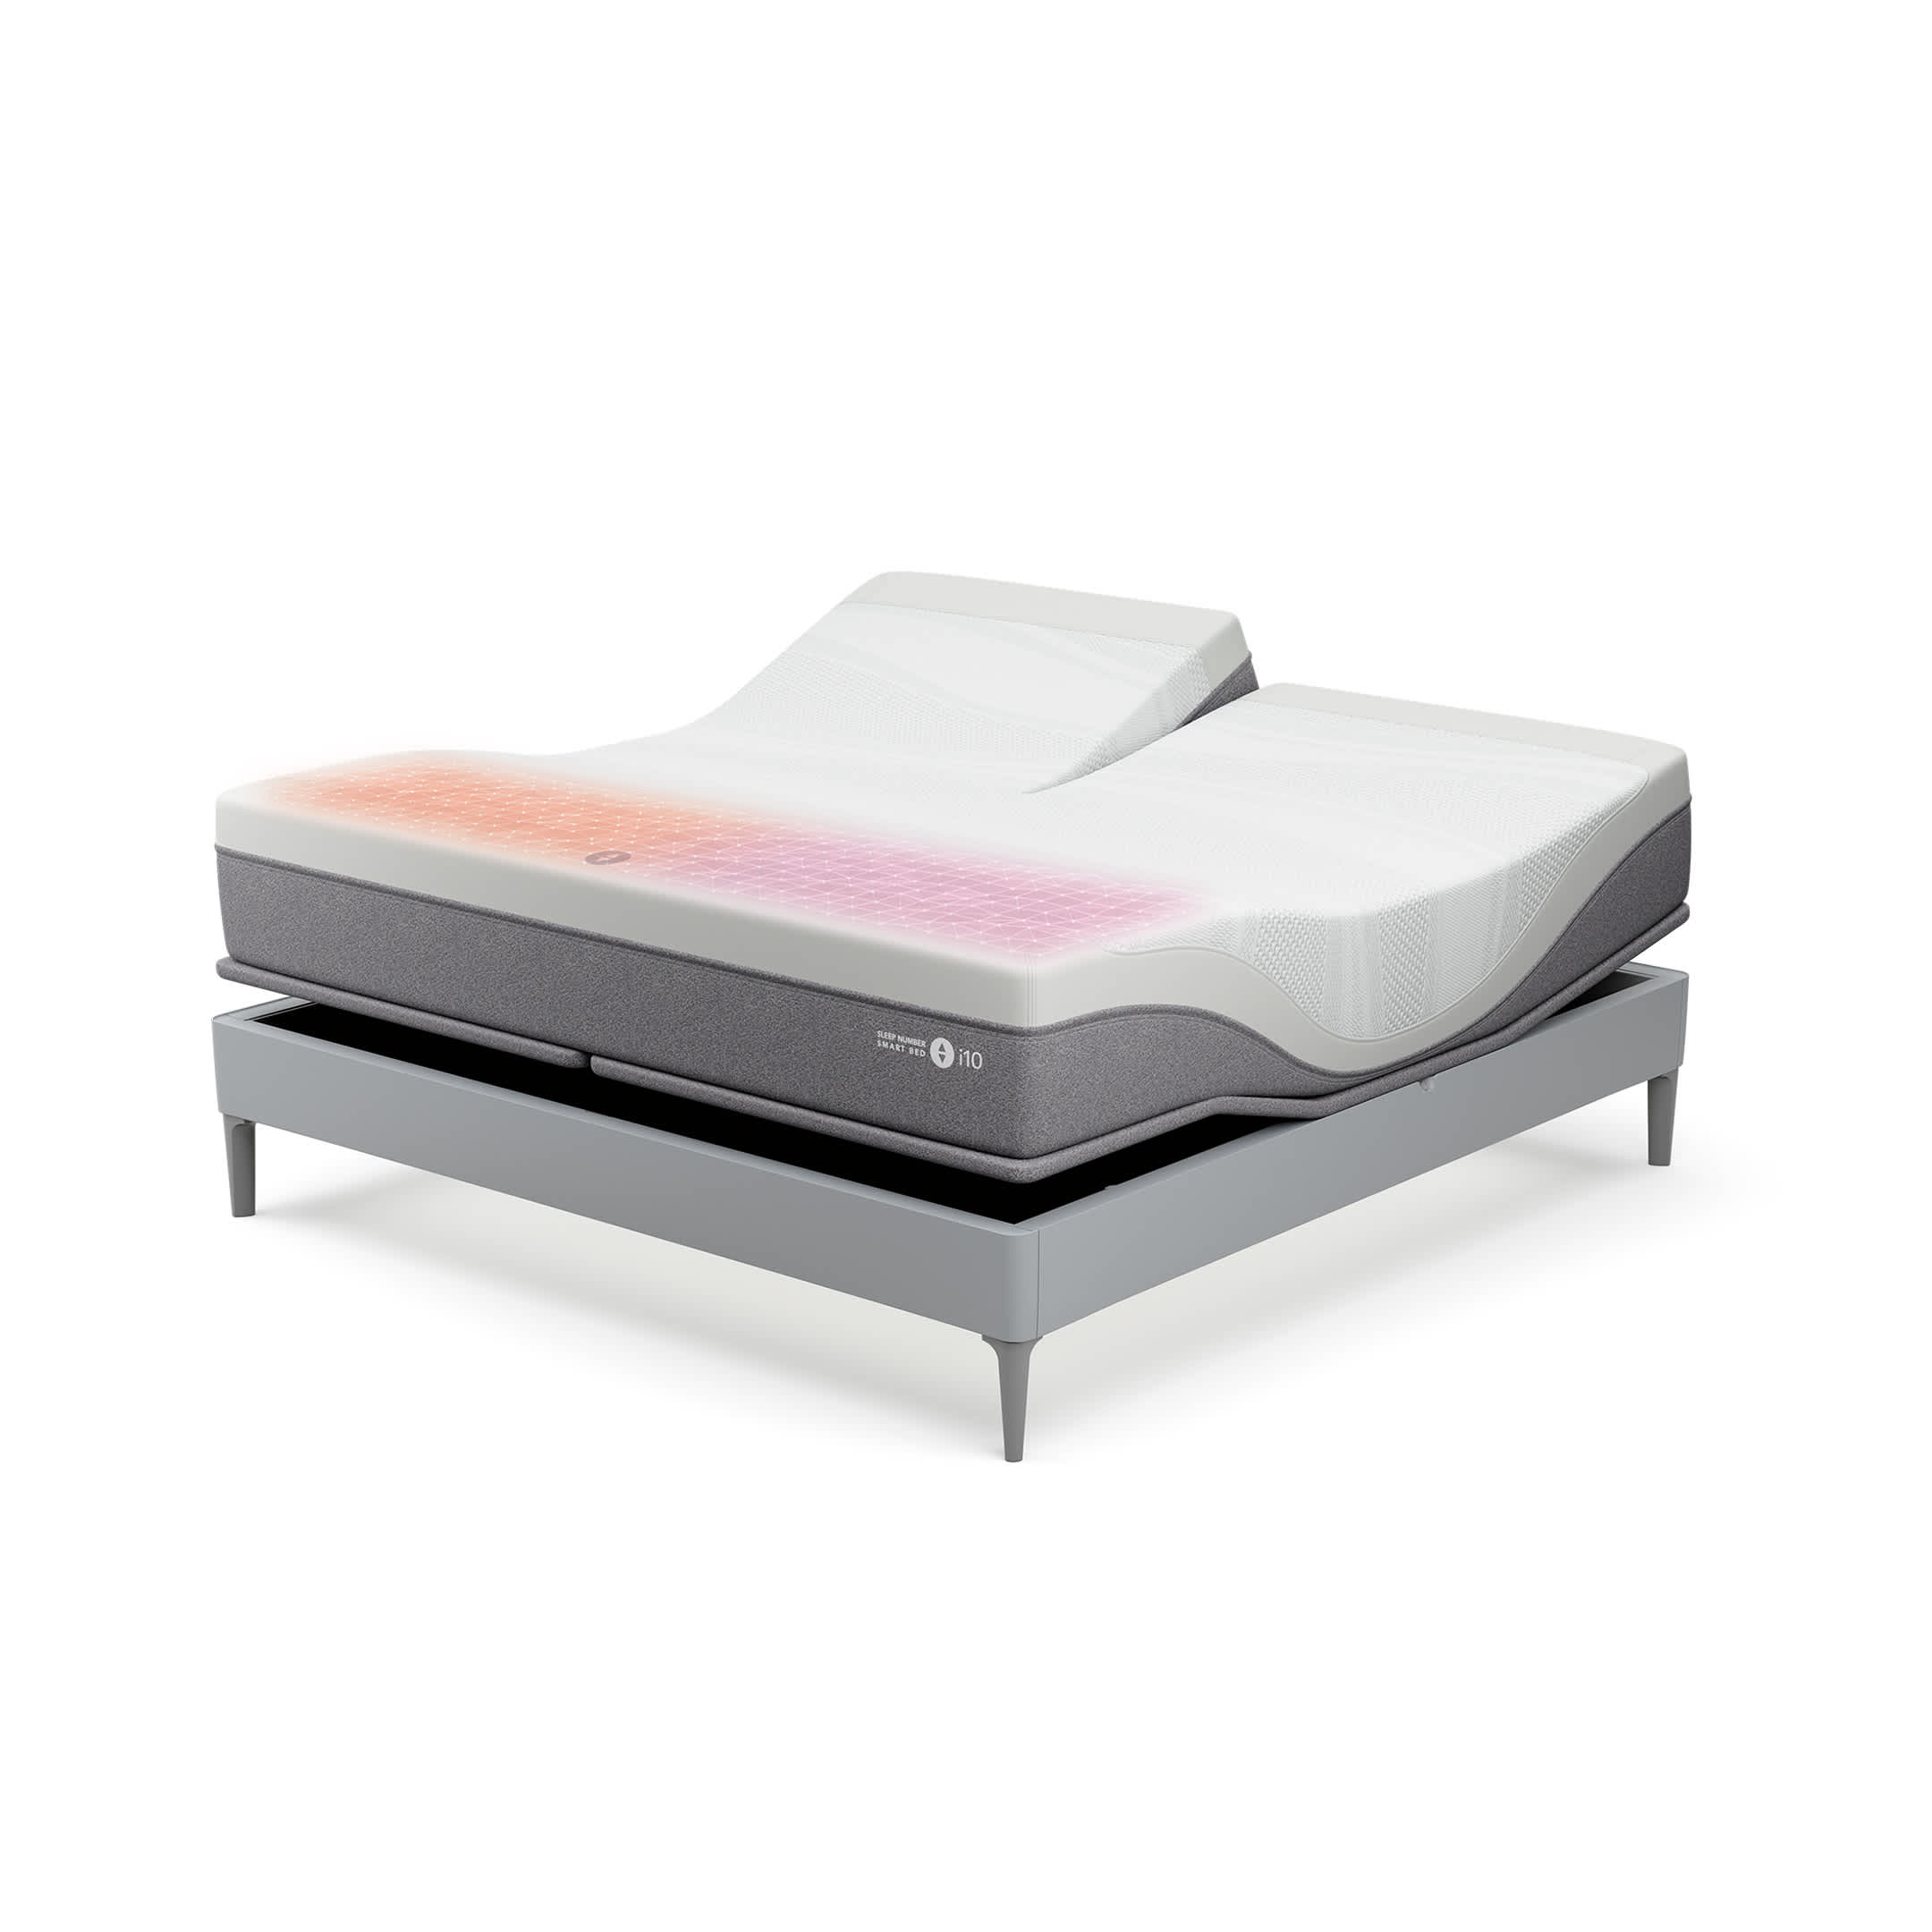 Adjustable Beds & Bases - Sleep Number